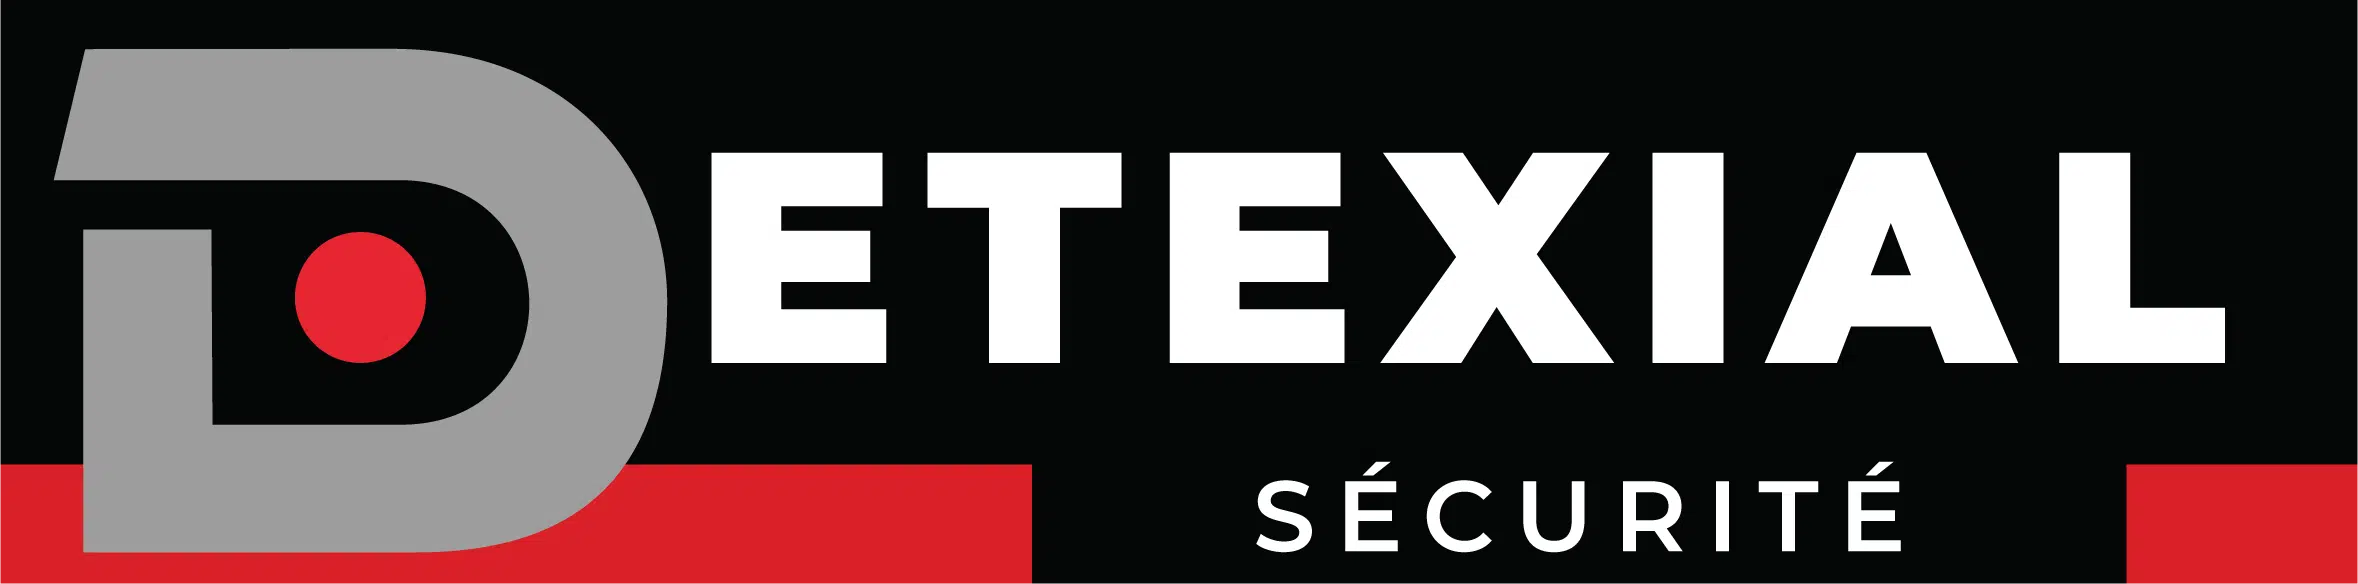 logo detexial sécurité